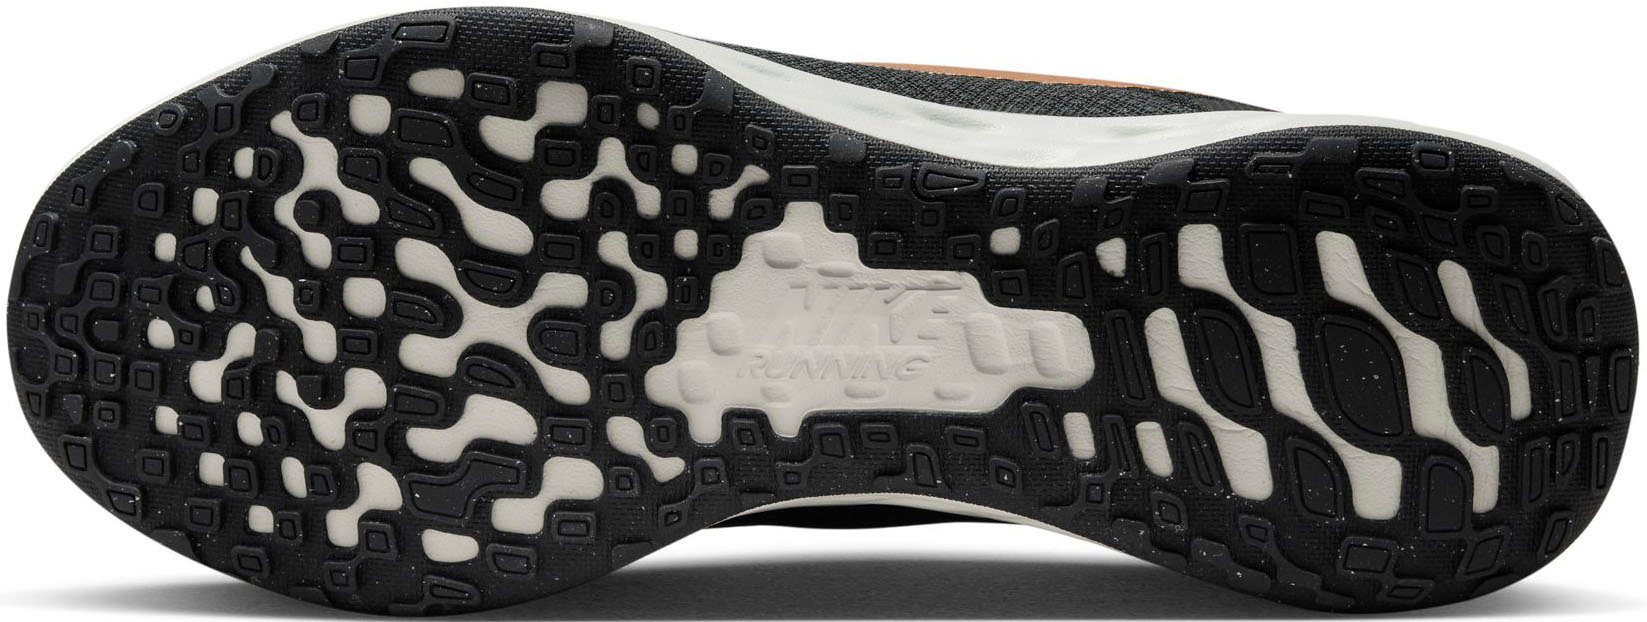 Nike REVOLUTION 6 DK-SMOKE-GREY-METALLIC-COPPER Laufschuh NEXT NATURE